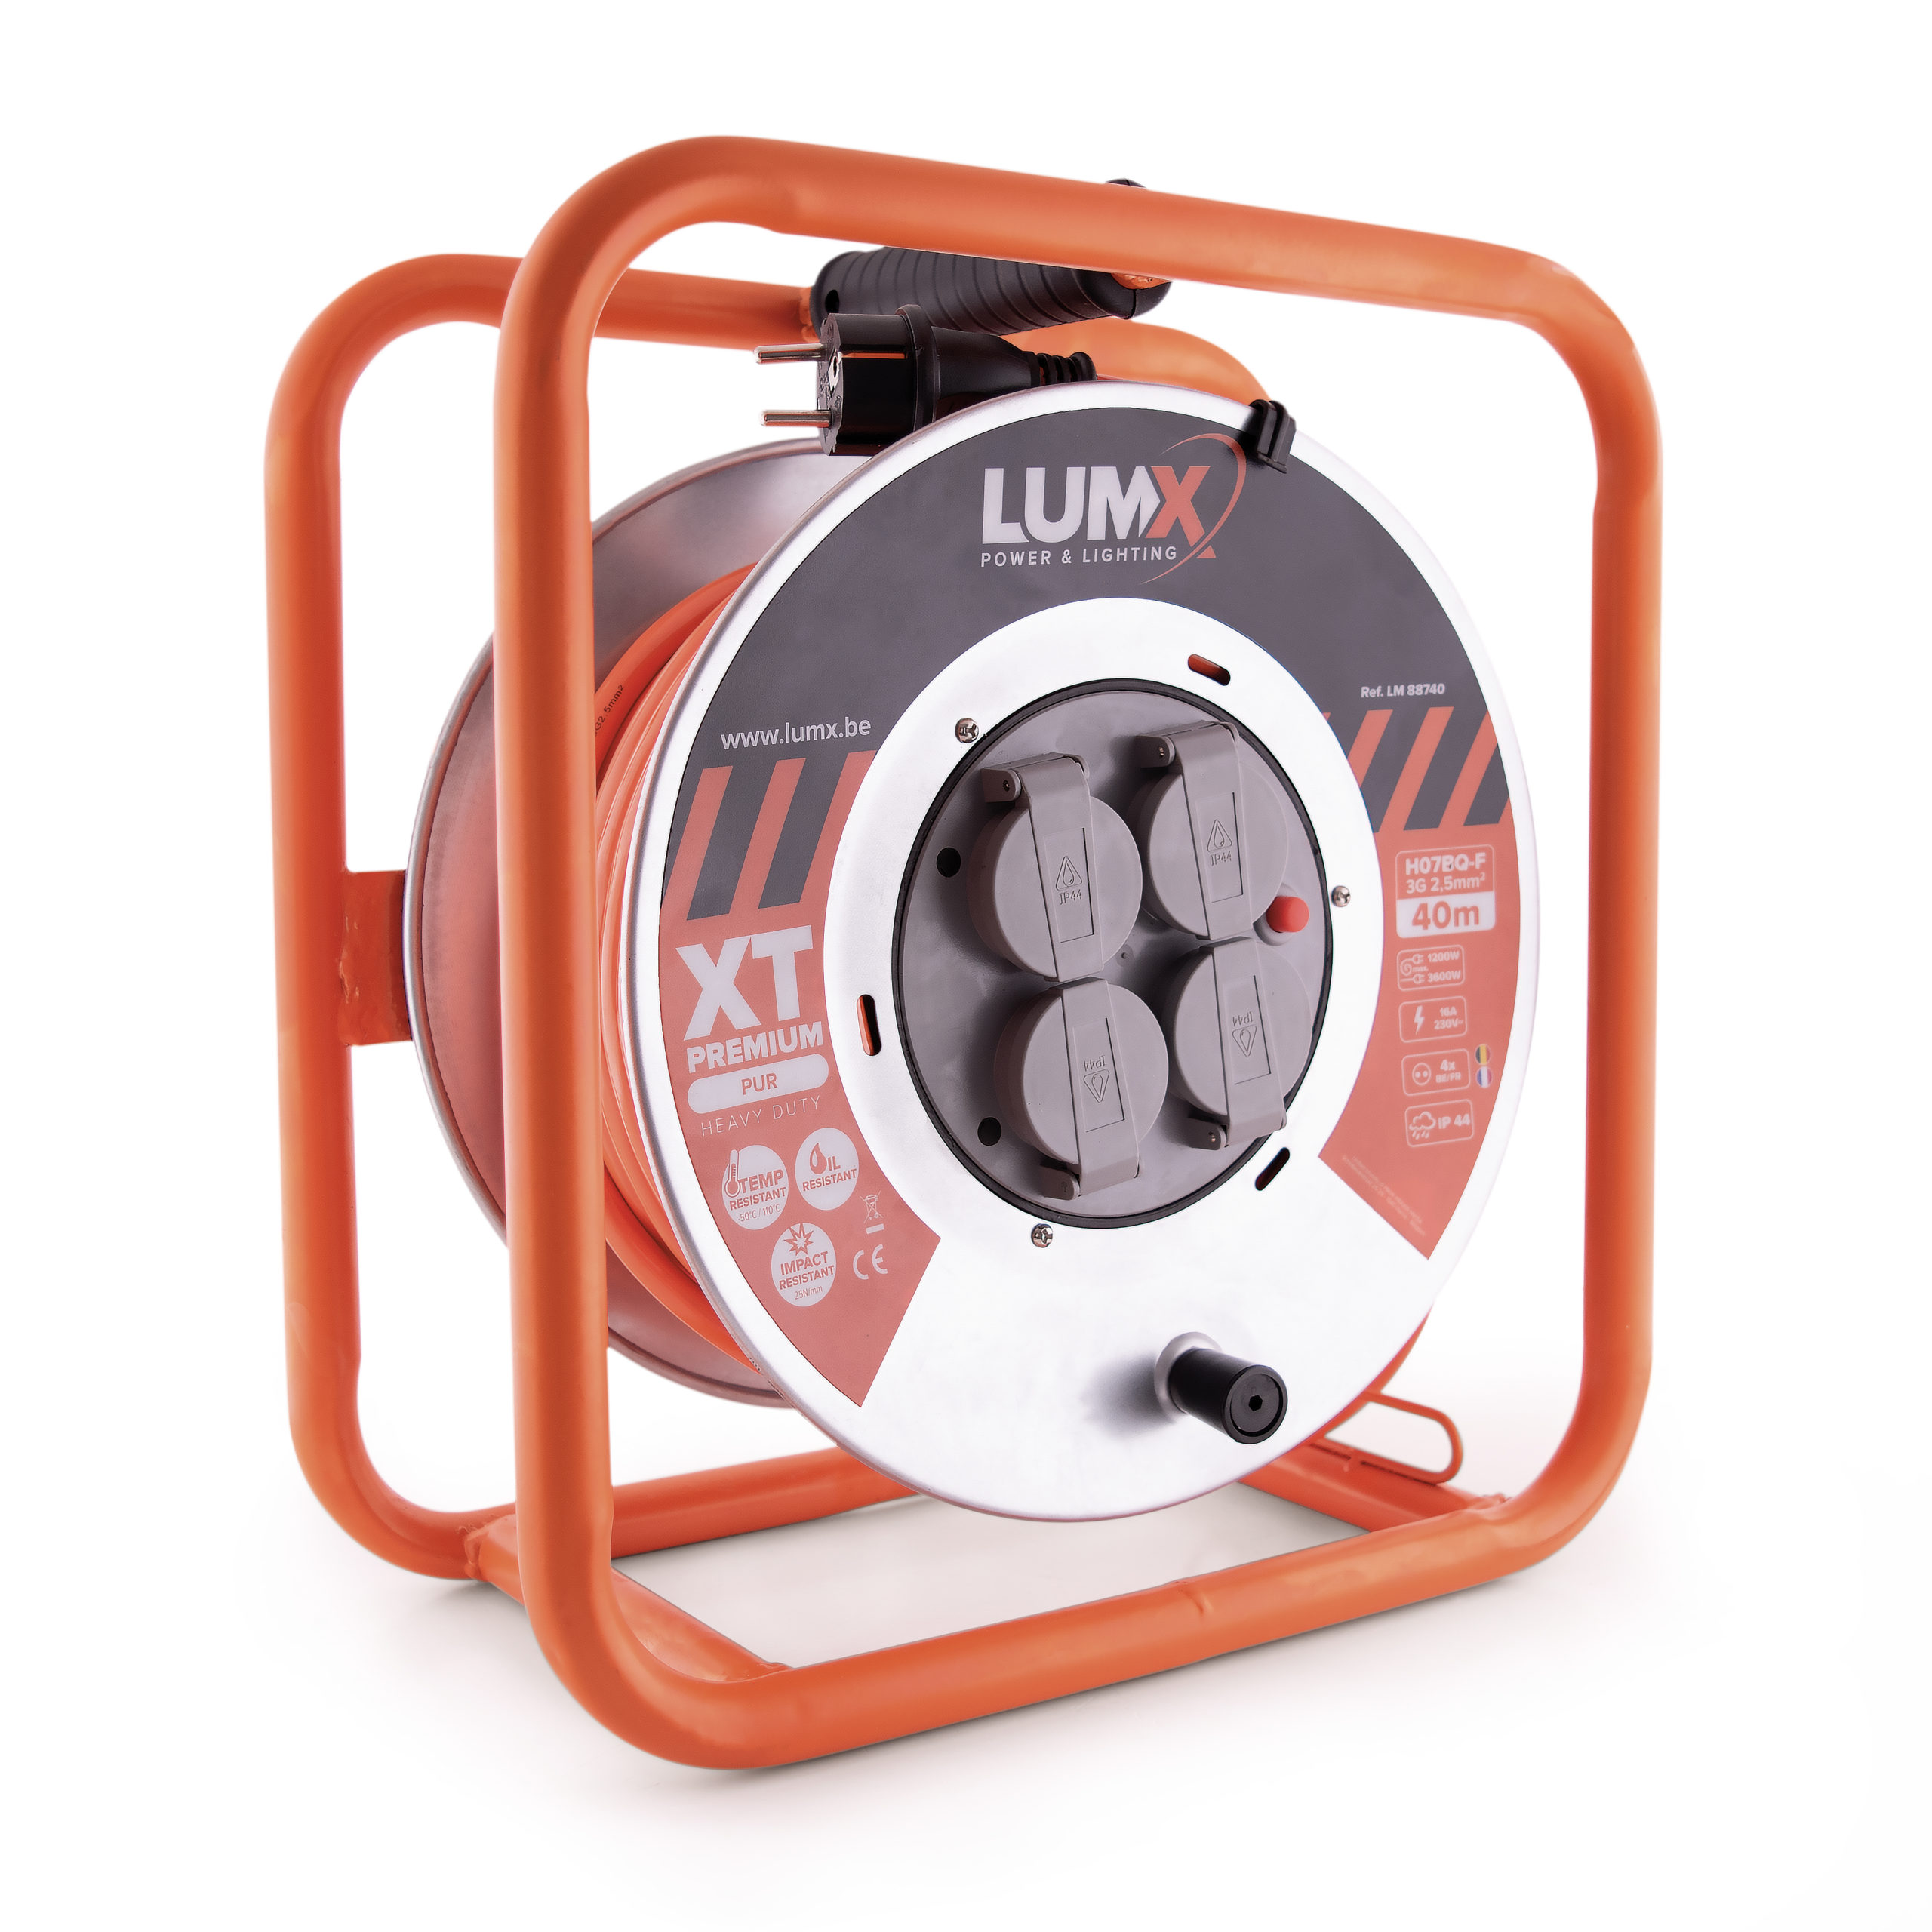 LumX enrouleur XT-PREMIUM câble HO7BQ-F 3Gx2,5 - 40 m